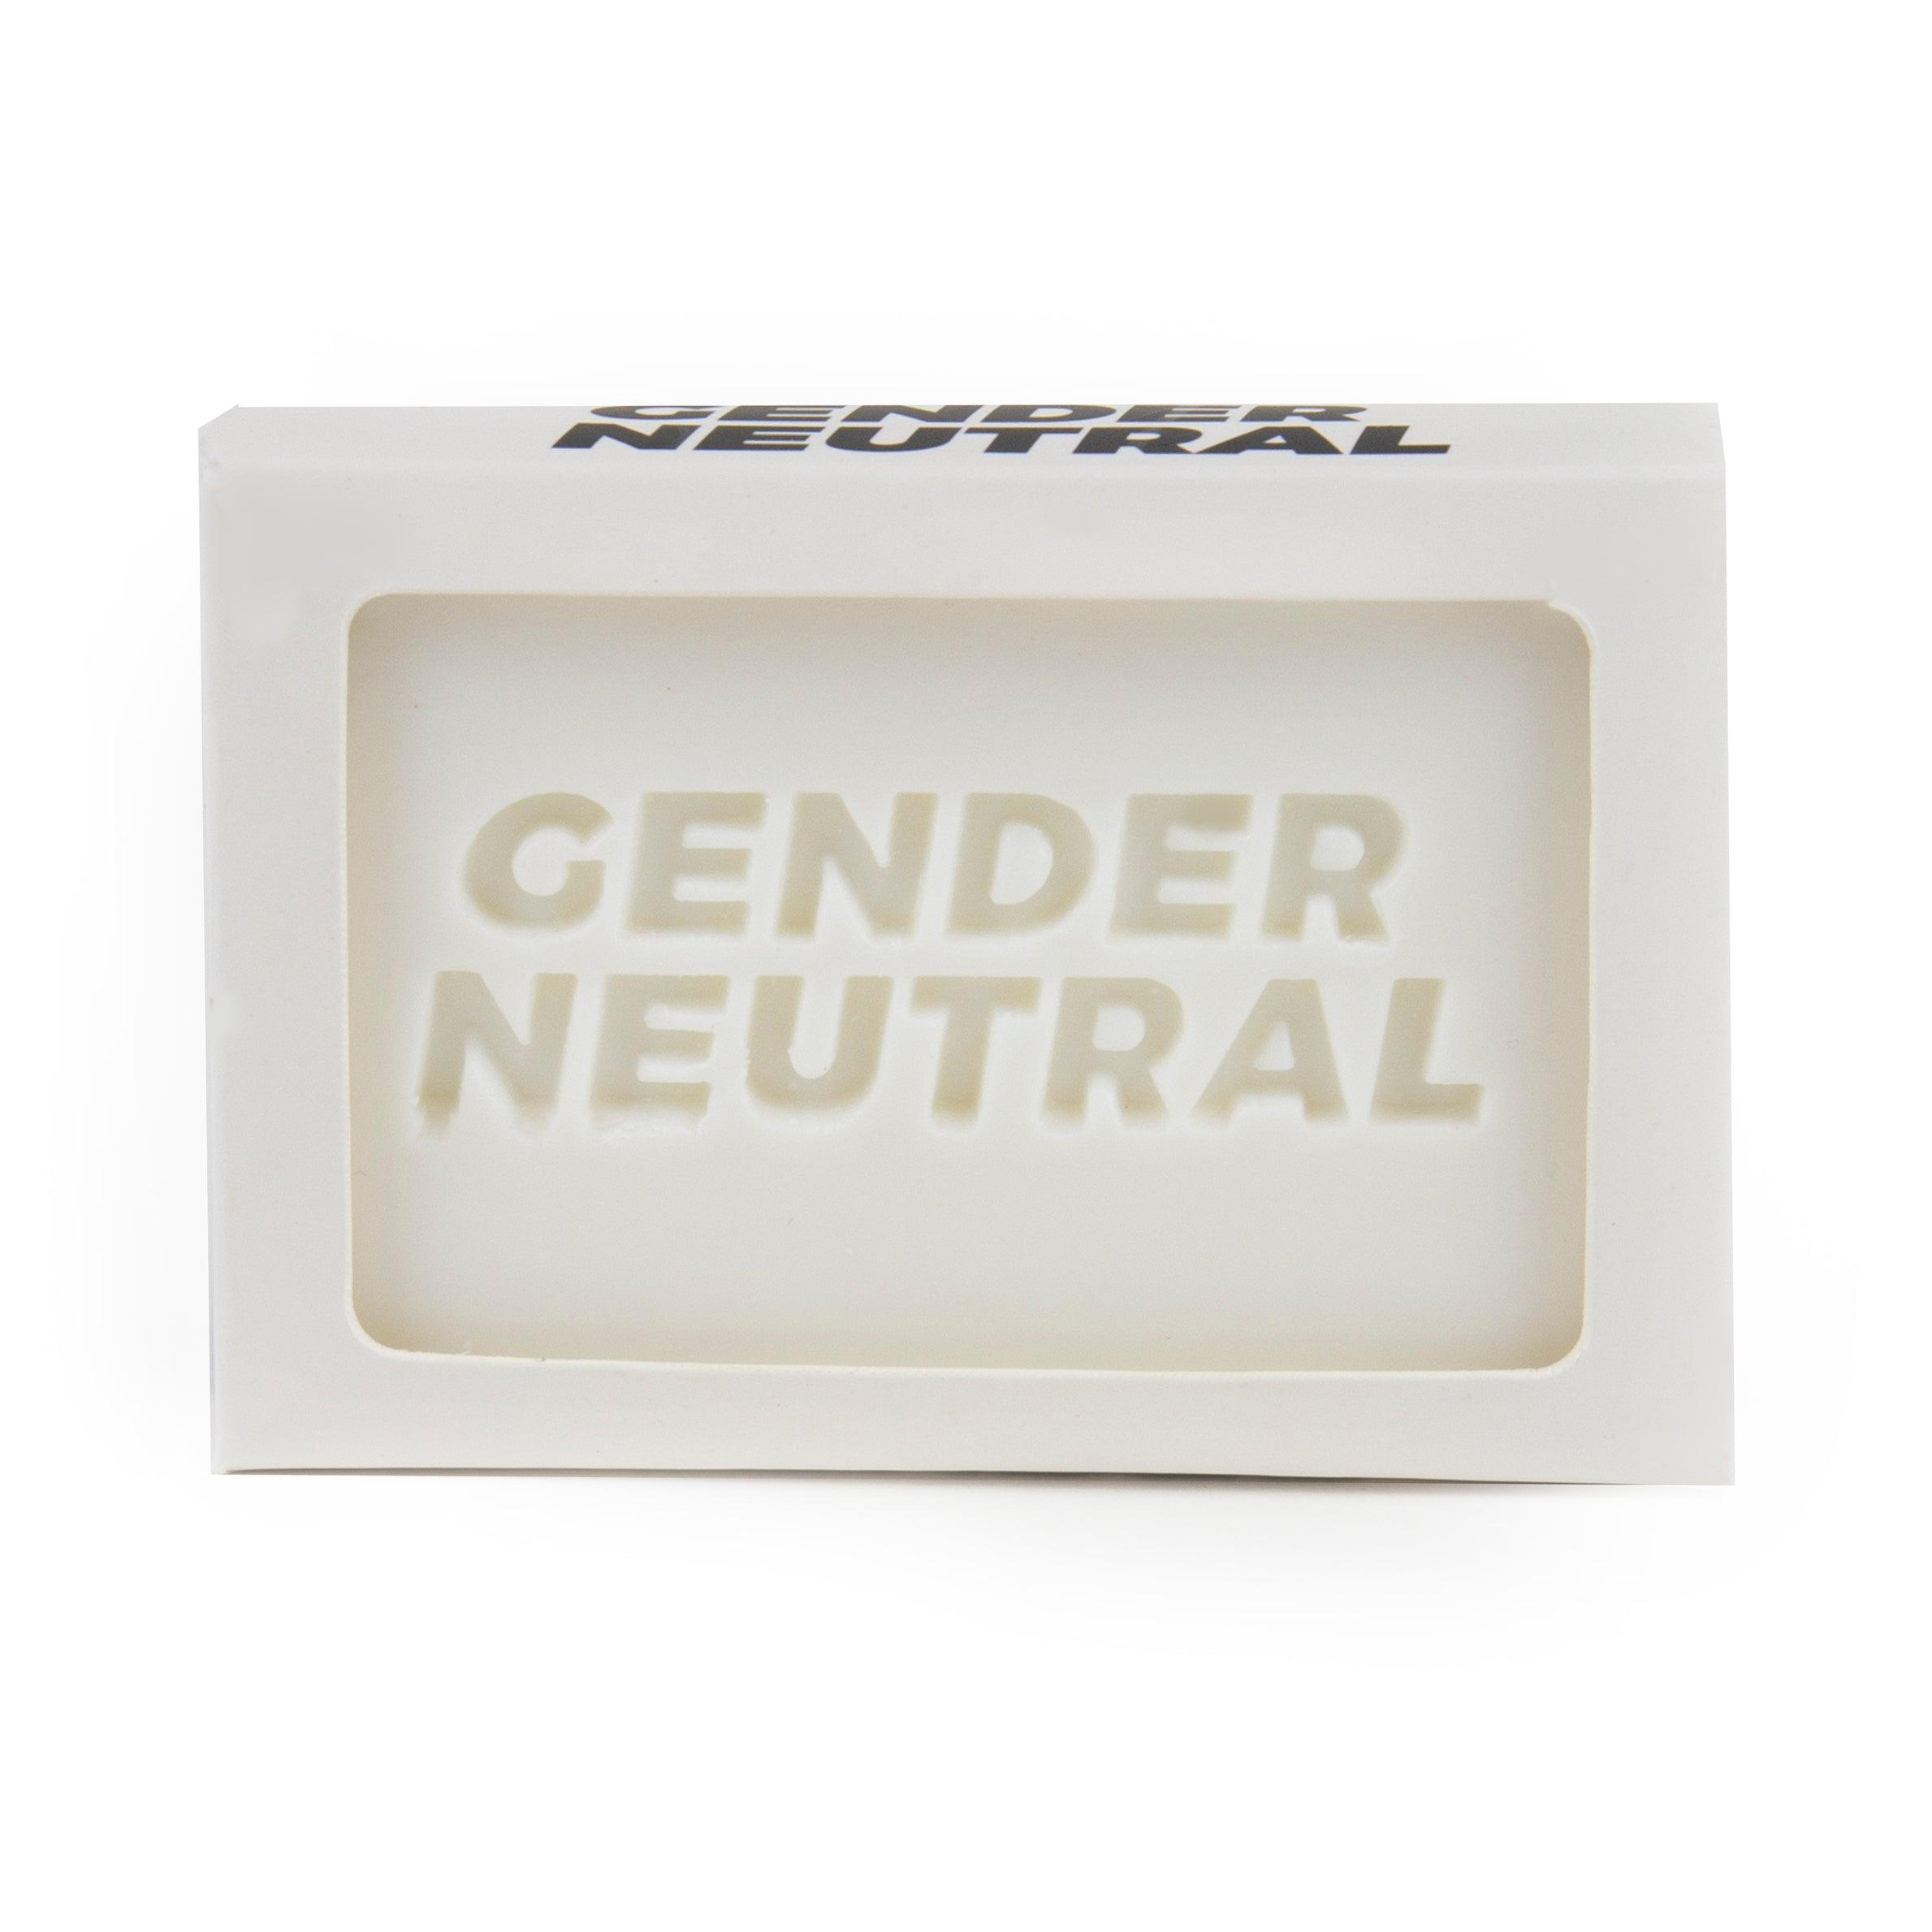 Gender Neutral Soap - Passionfruit